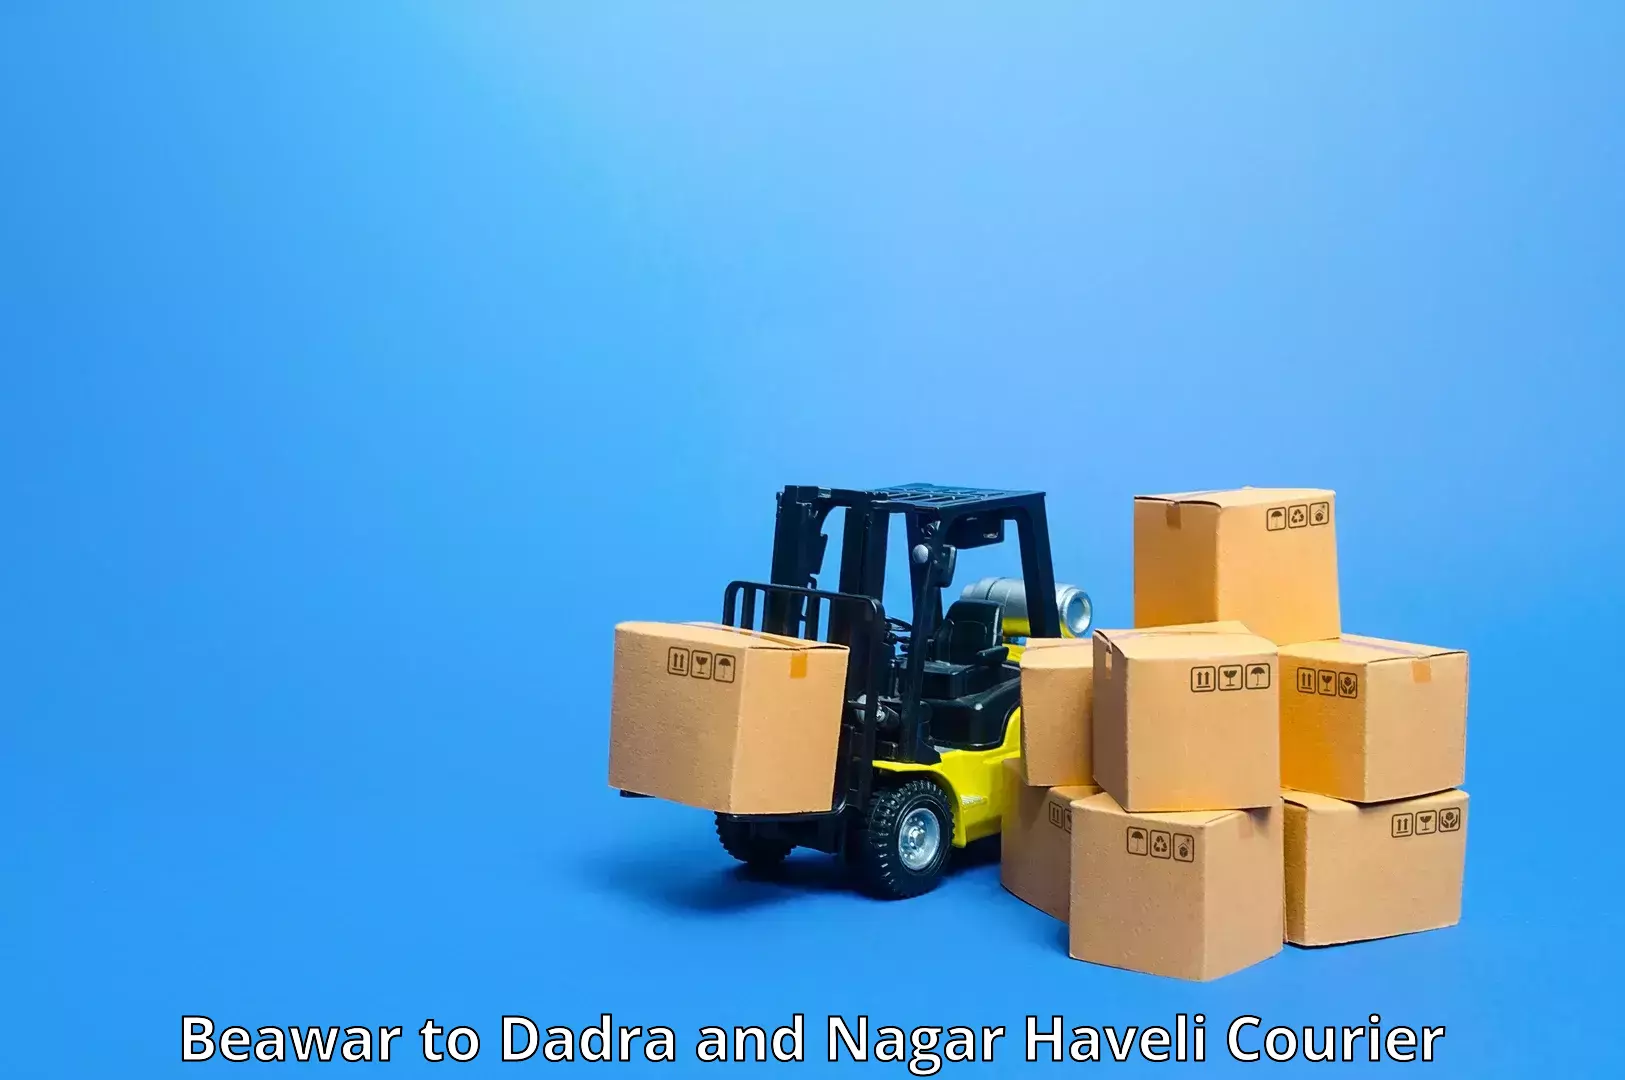 Next day courier Beawar to Dadra and Nagar Haveli